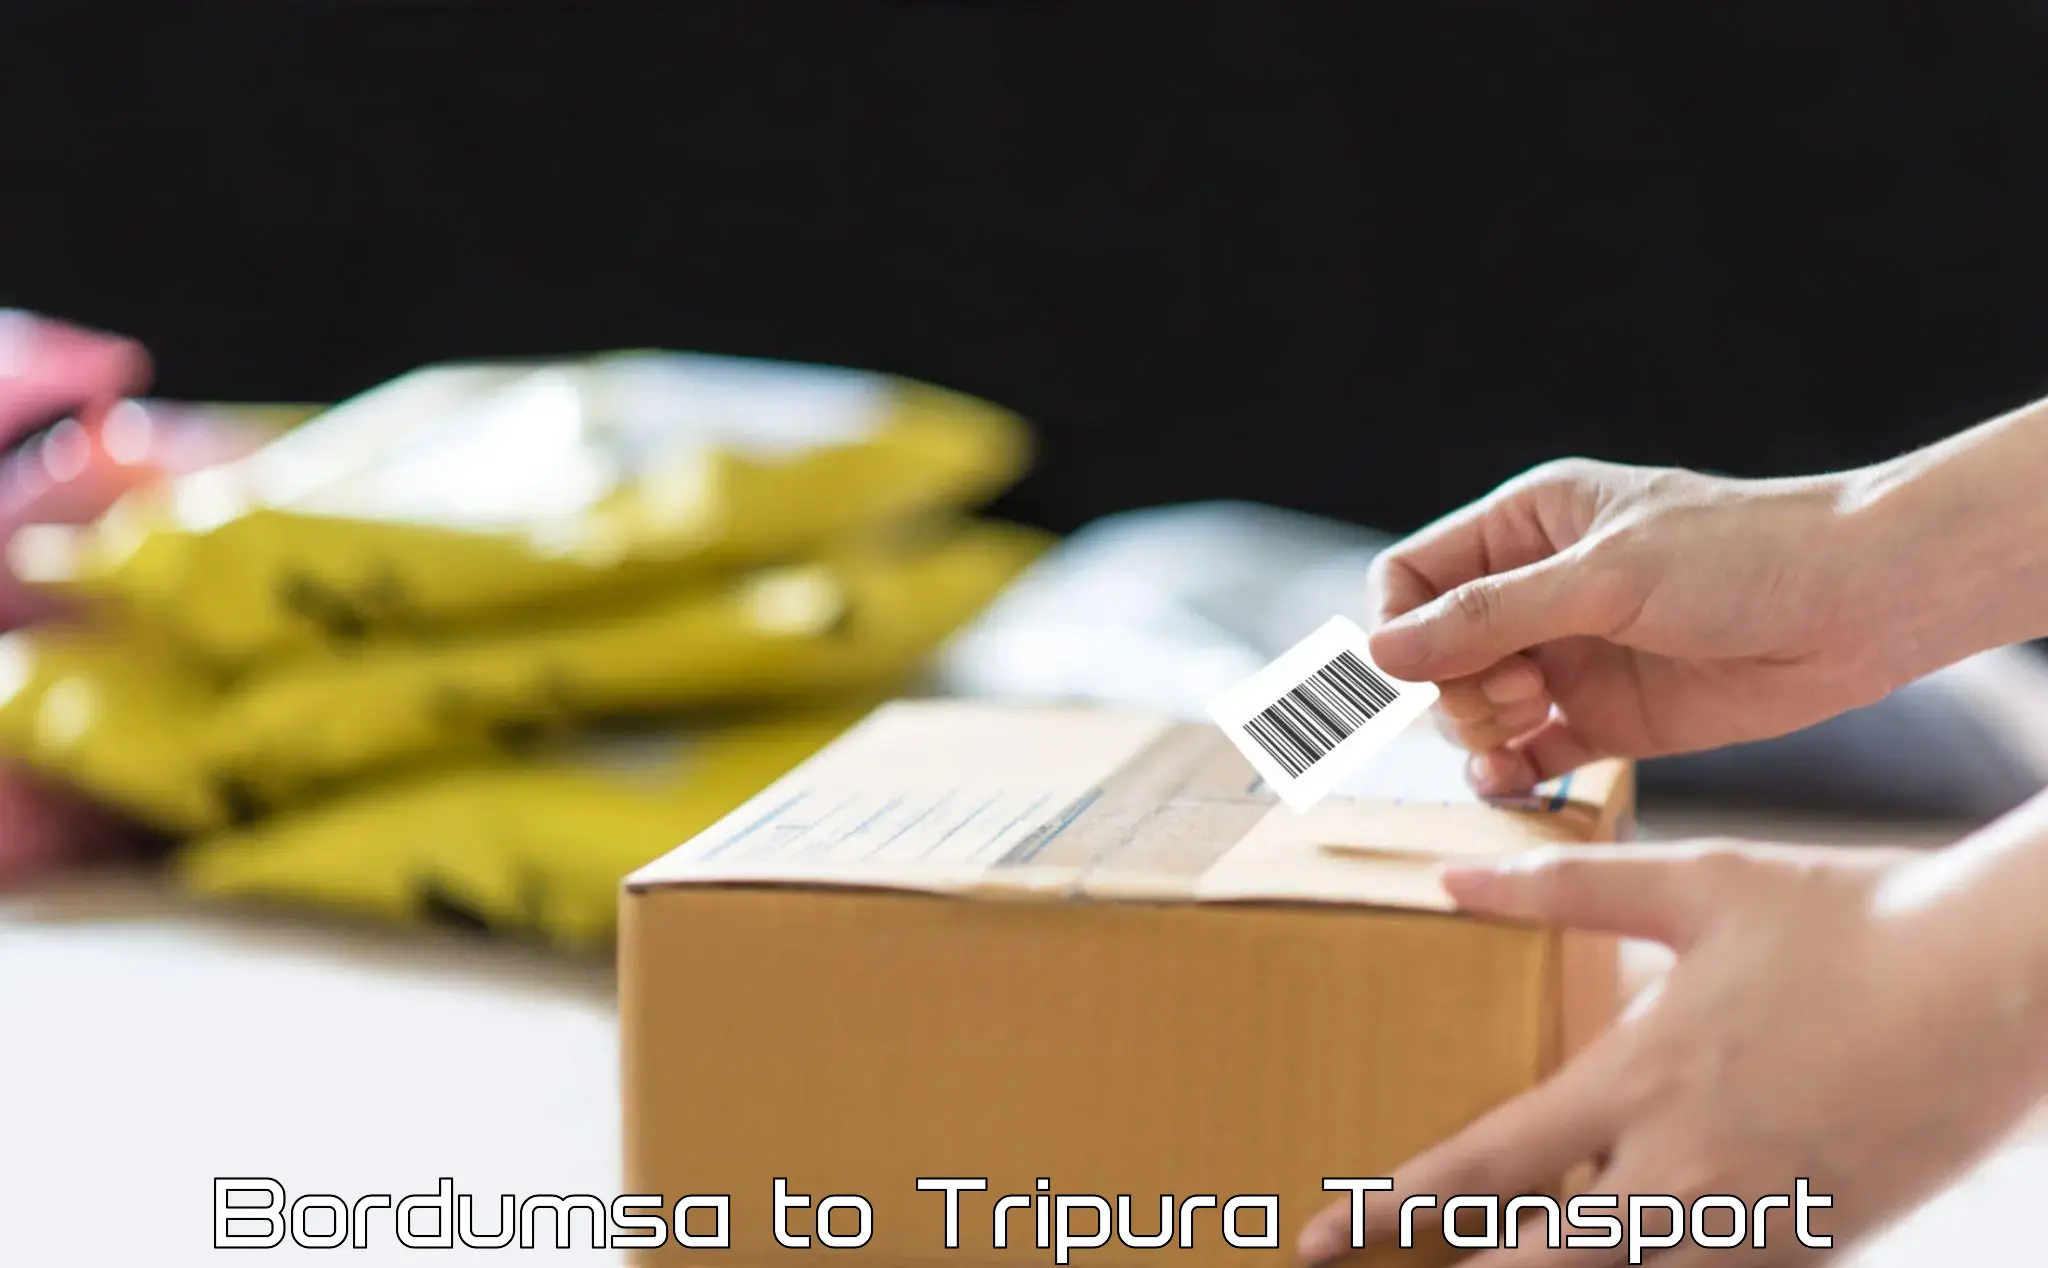 Nearby transport service Bordumsa to Tripura